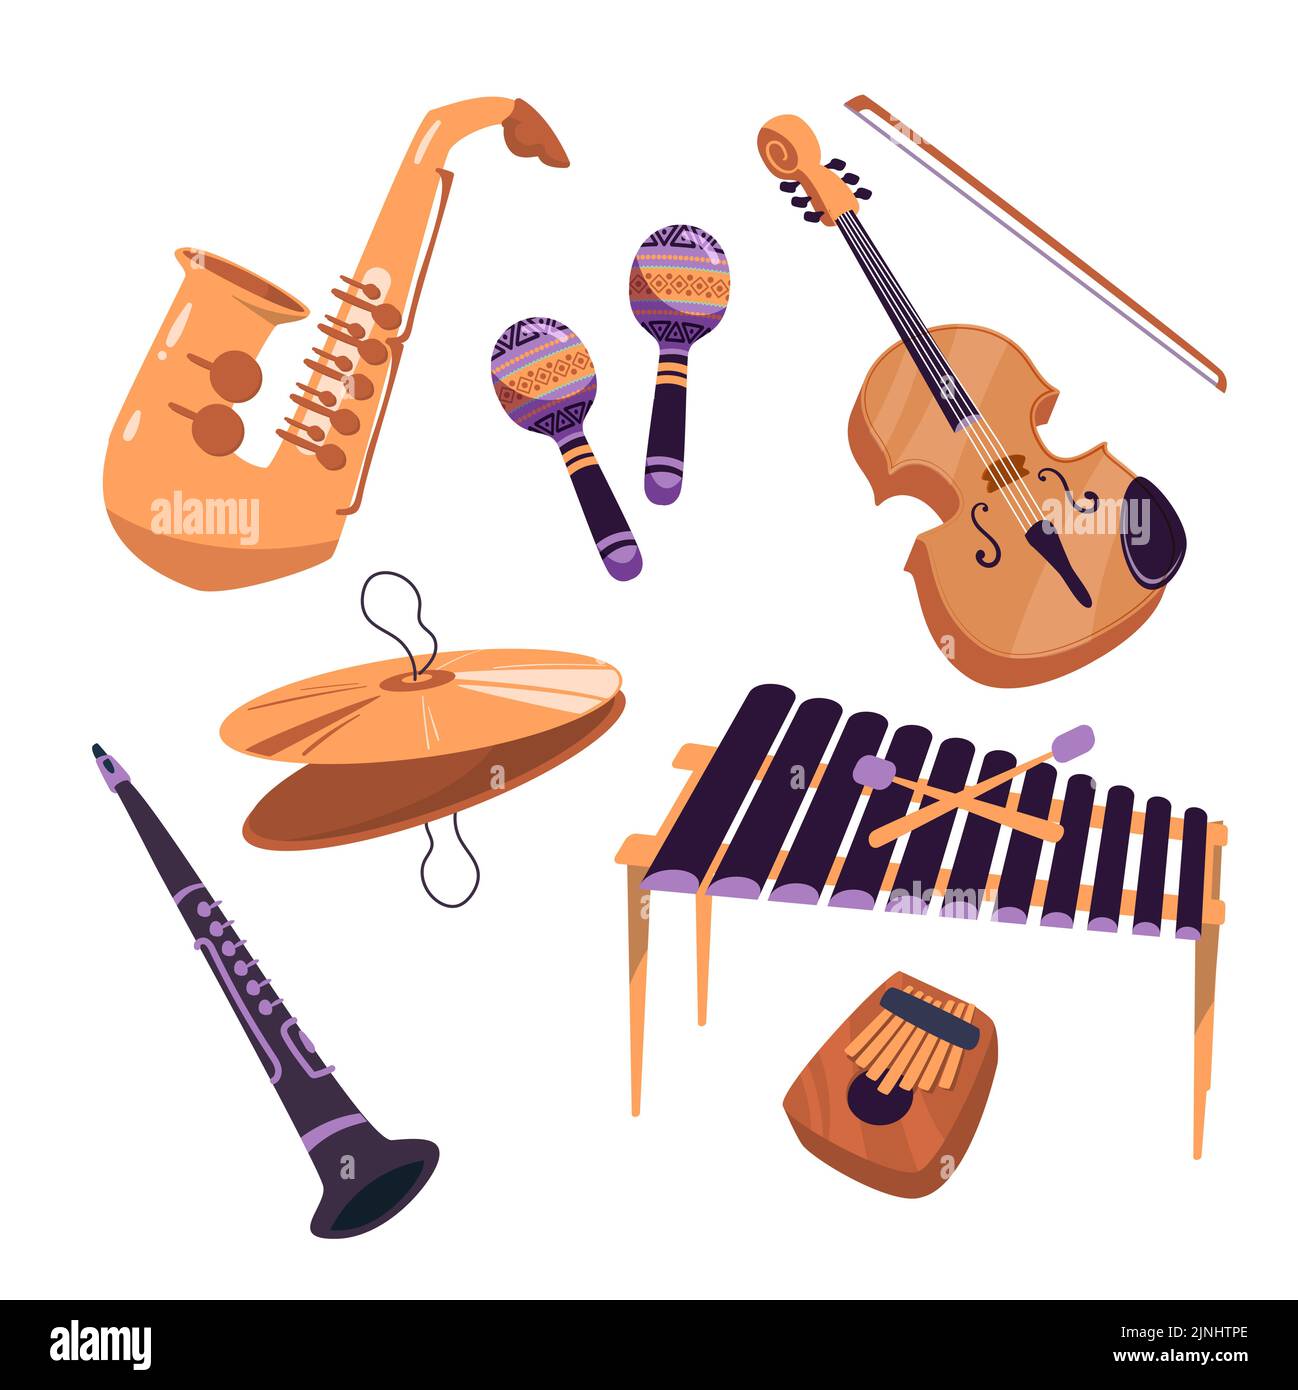 Musikinstrumente Element Set Vektor Illustration. Stock Vektor